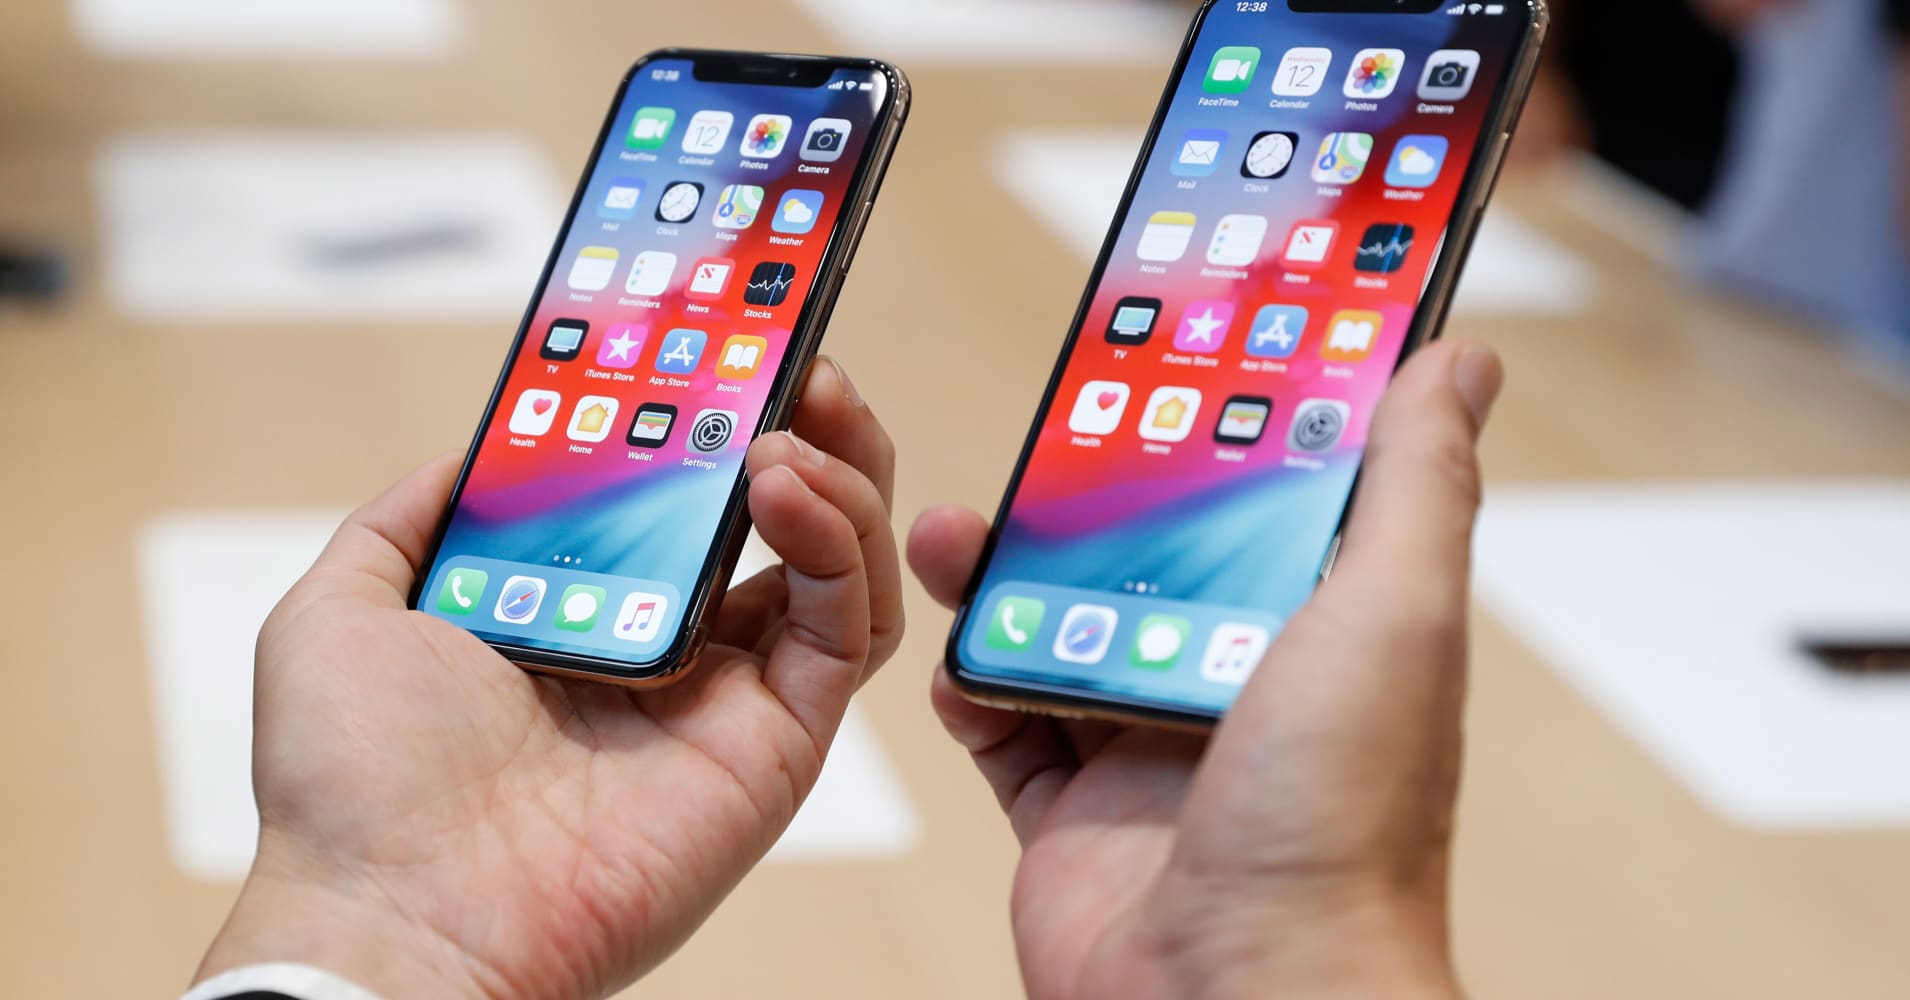 Apple announces iPhone XS, iPhone XS Max, iPhone XR price